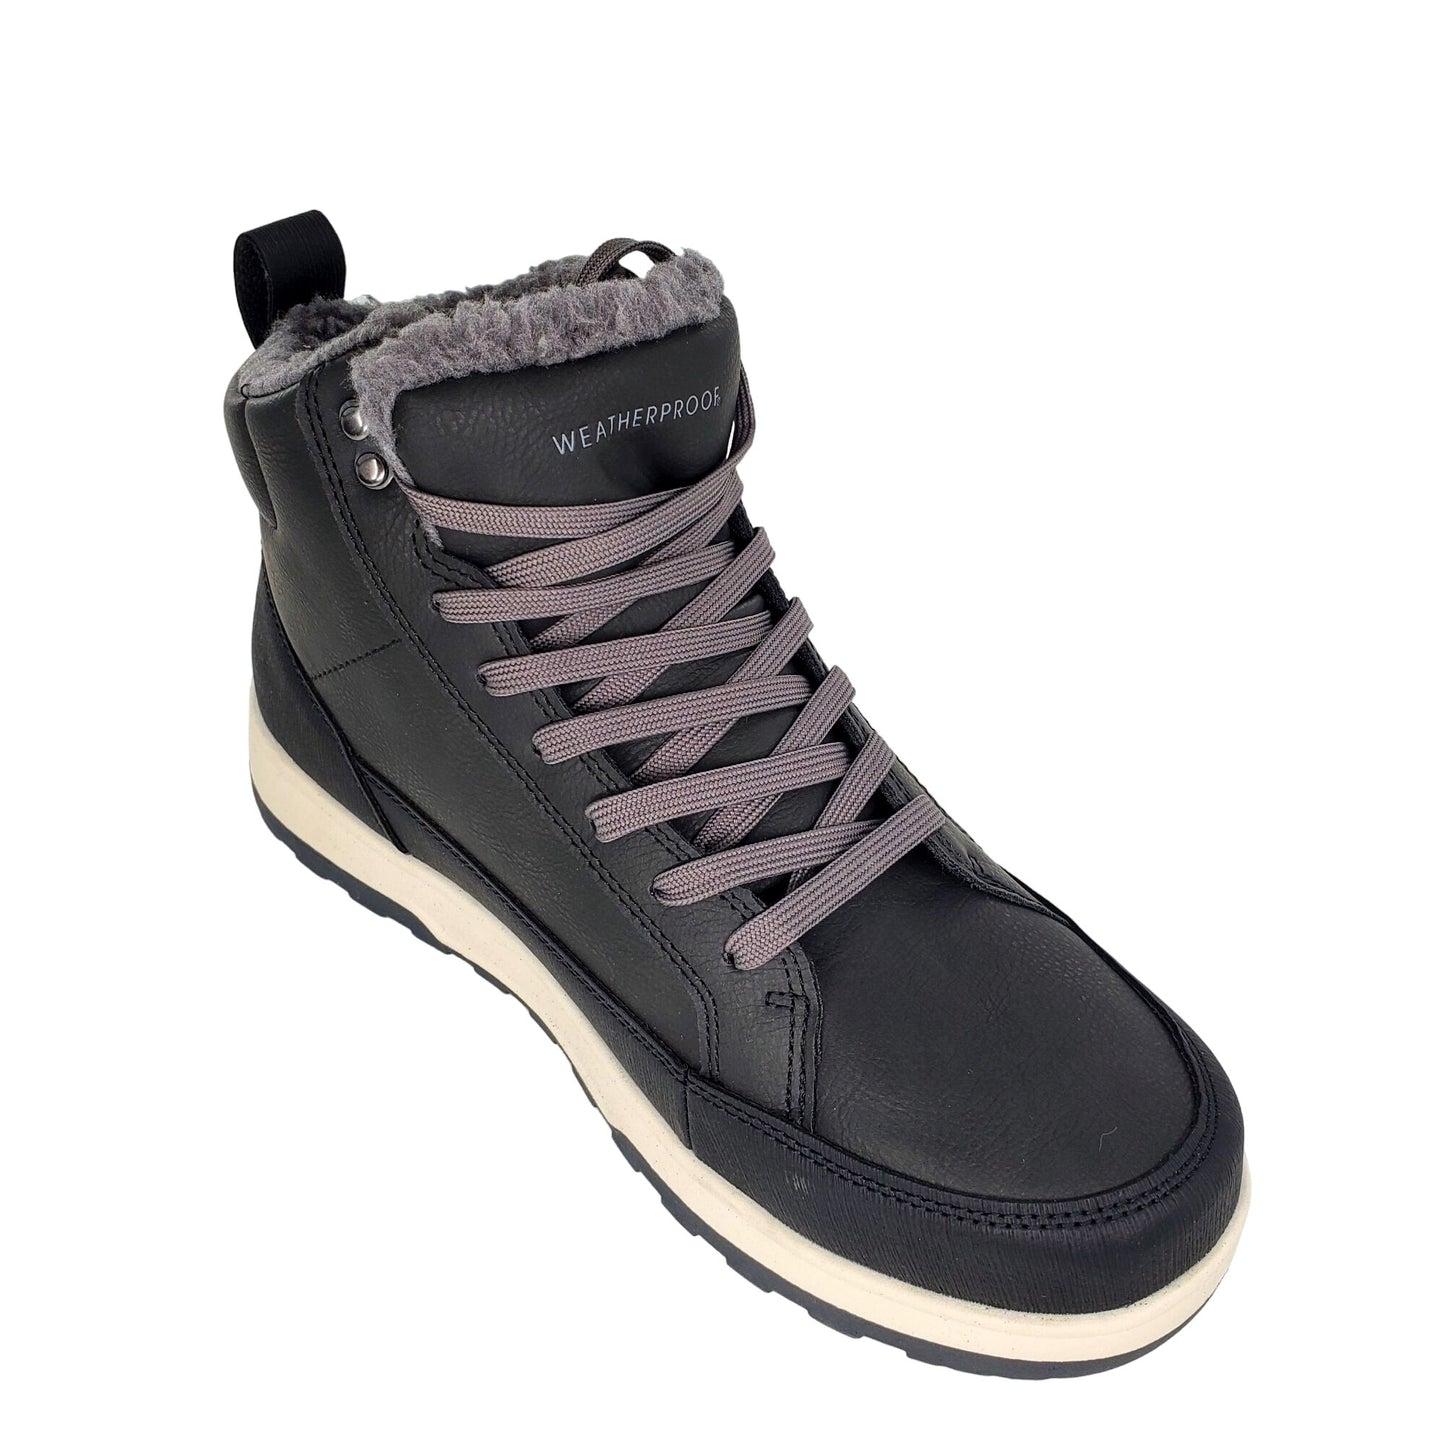 WEATHERPROOF Sneaker Boots Mens Logjam Memory Foam Lace-up Outdoor Shoes